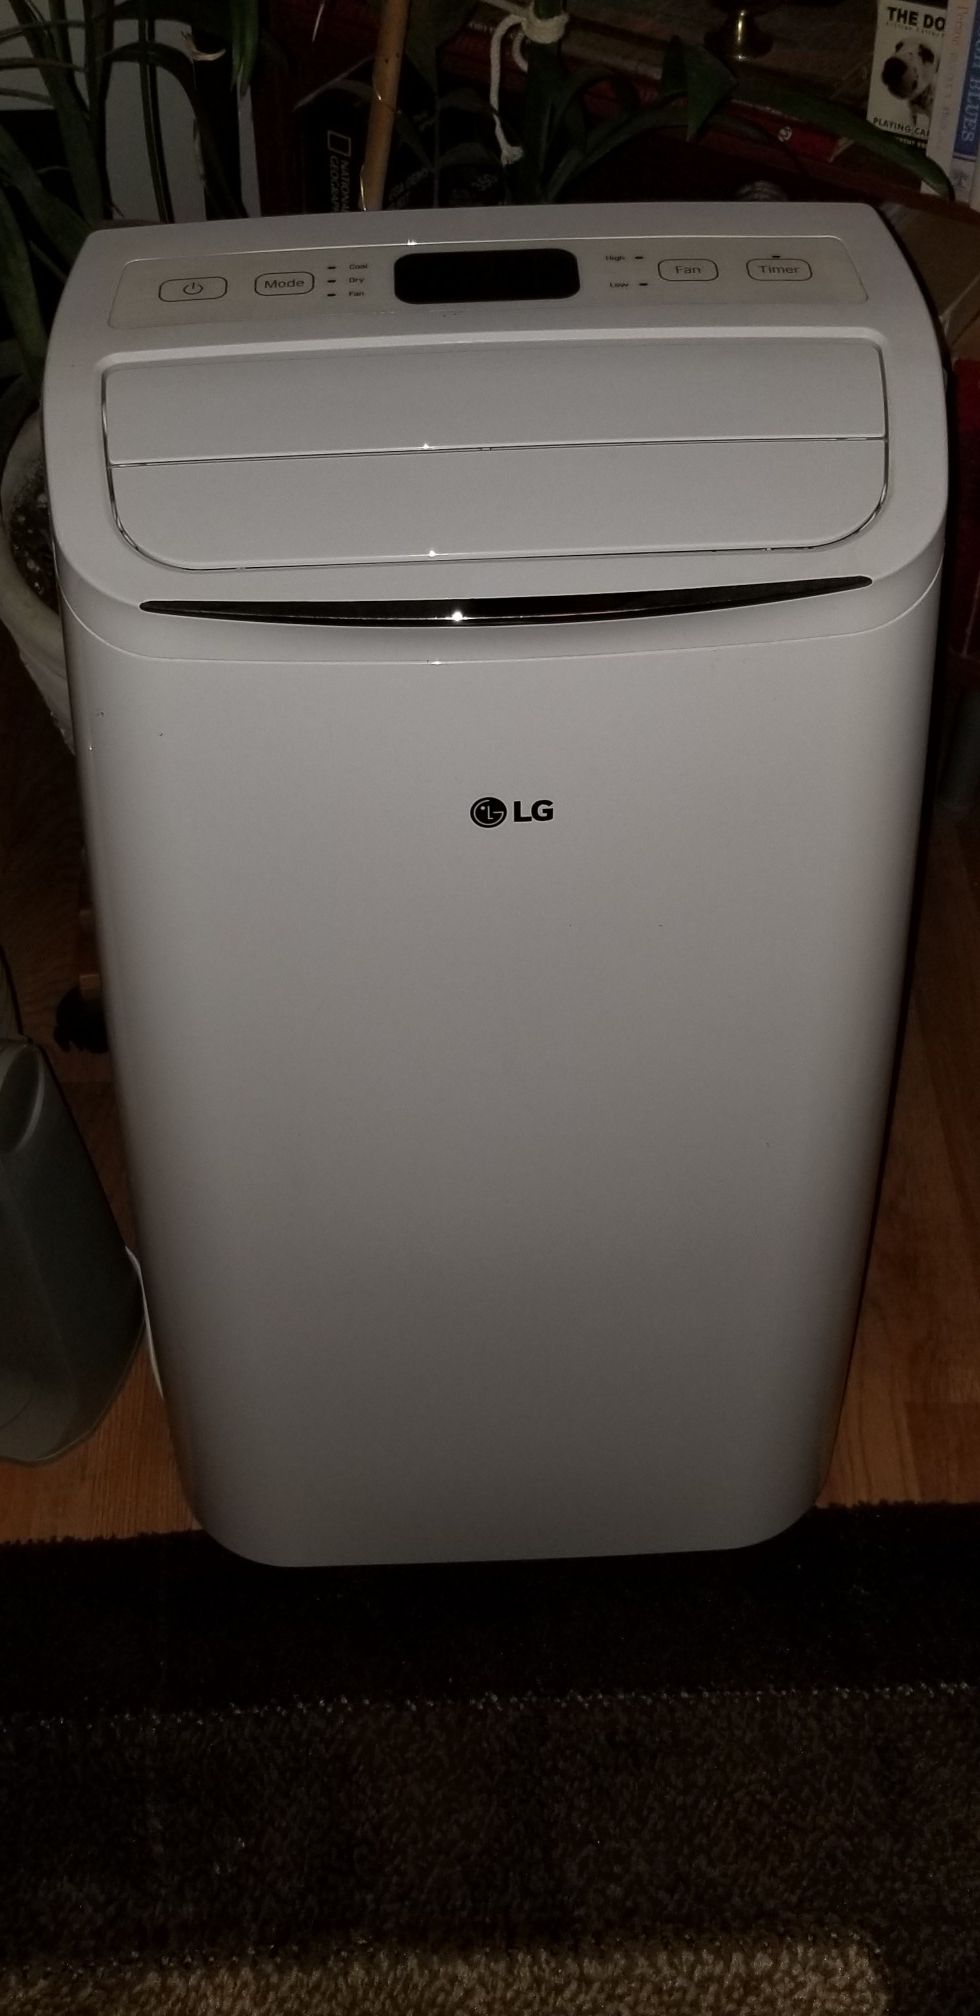 LG portable air conditioner model lp081818wnr